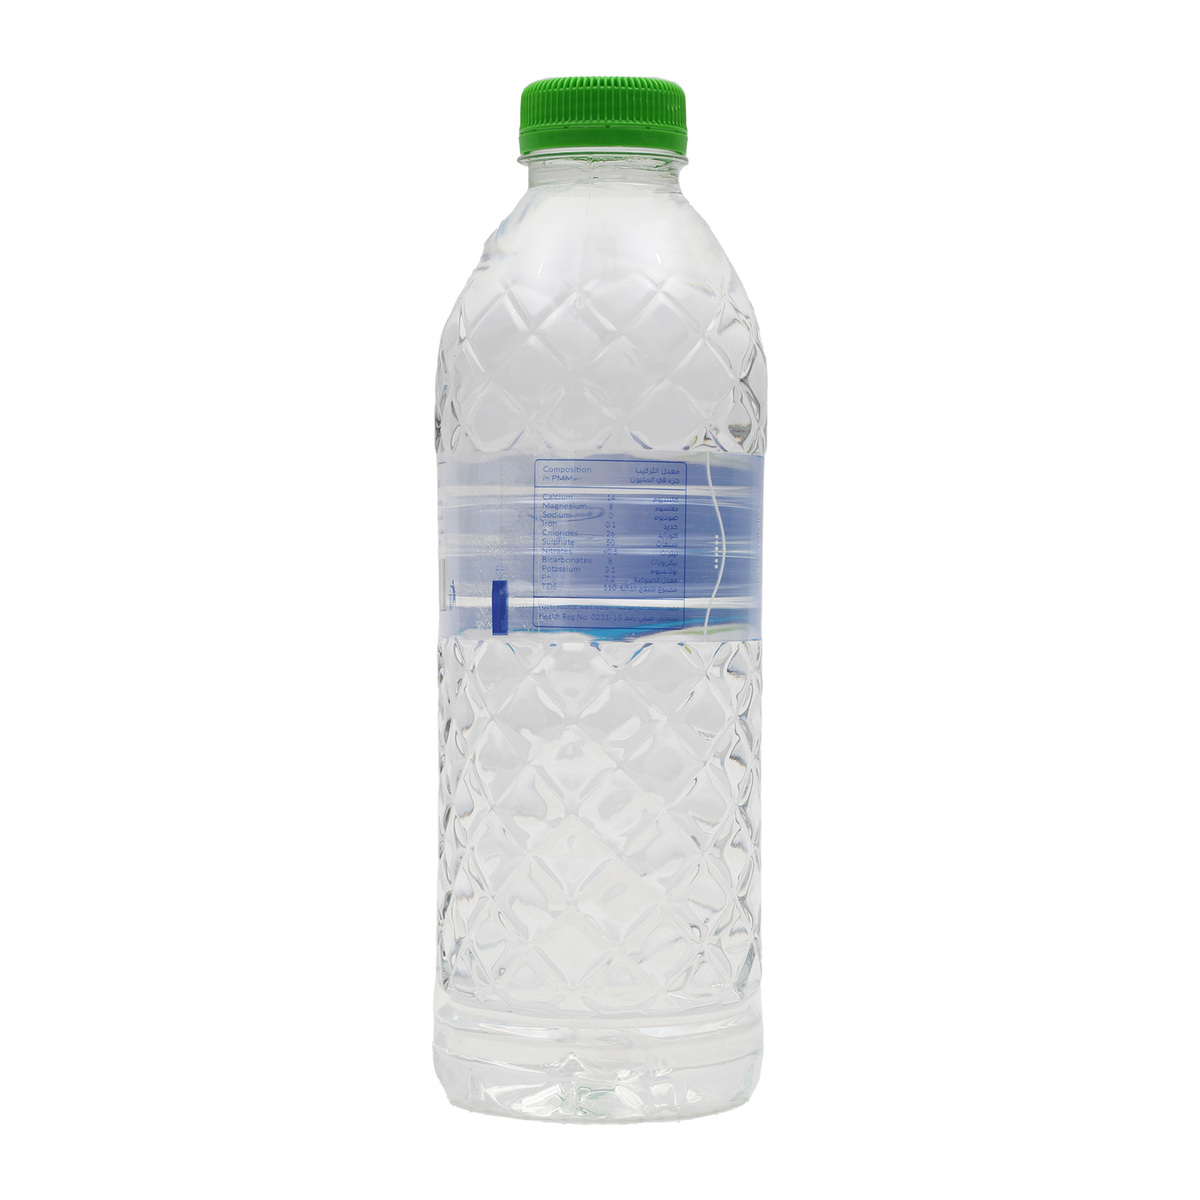 Aqua Clear Drinking Water Zero Sodium 500ml